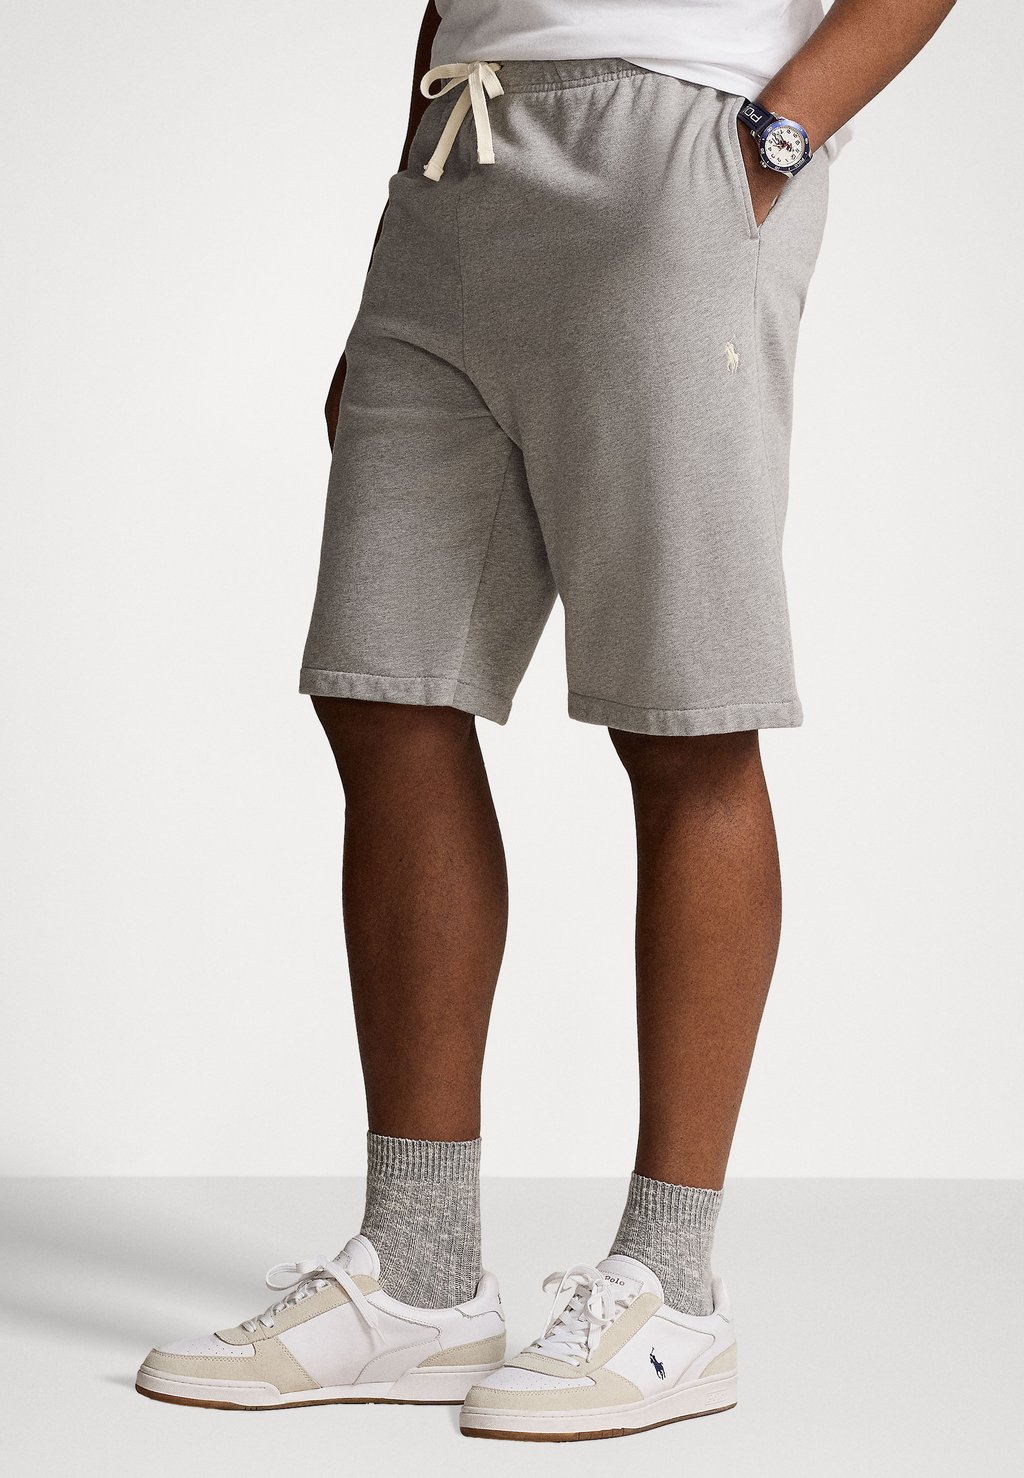 Спортивные брюки ATHLETIC Polo Ralph Lauren Big & Tall, серый